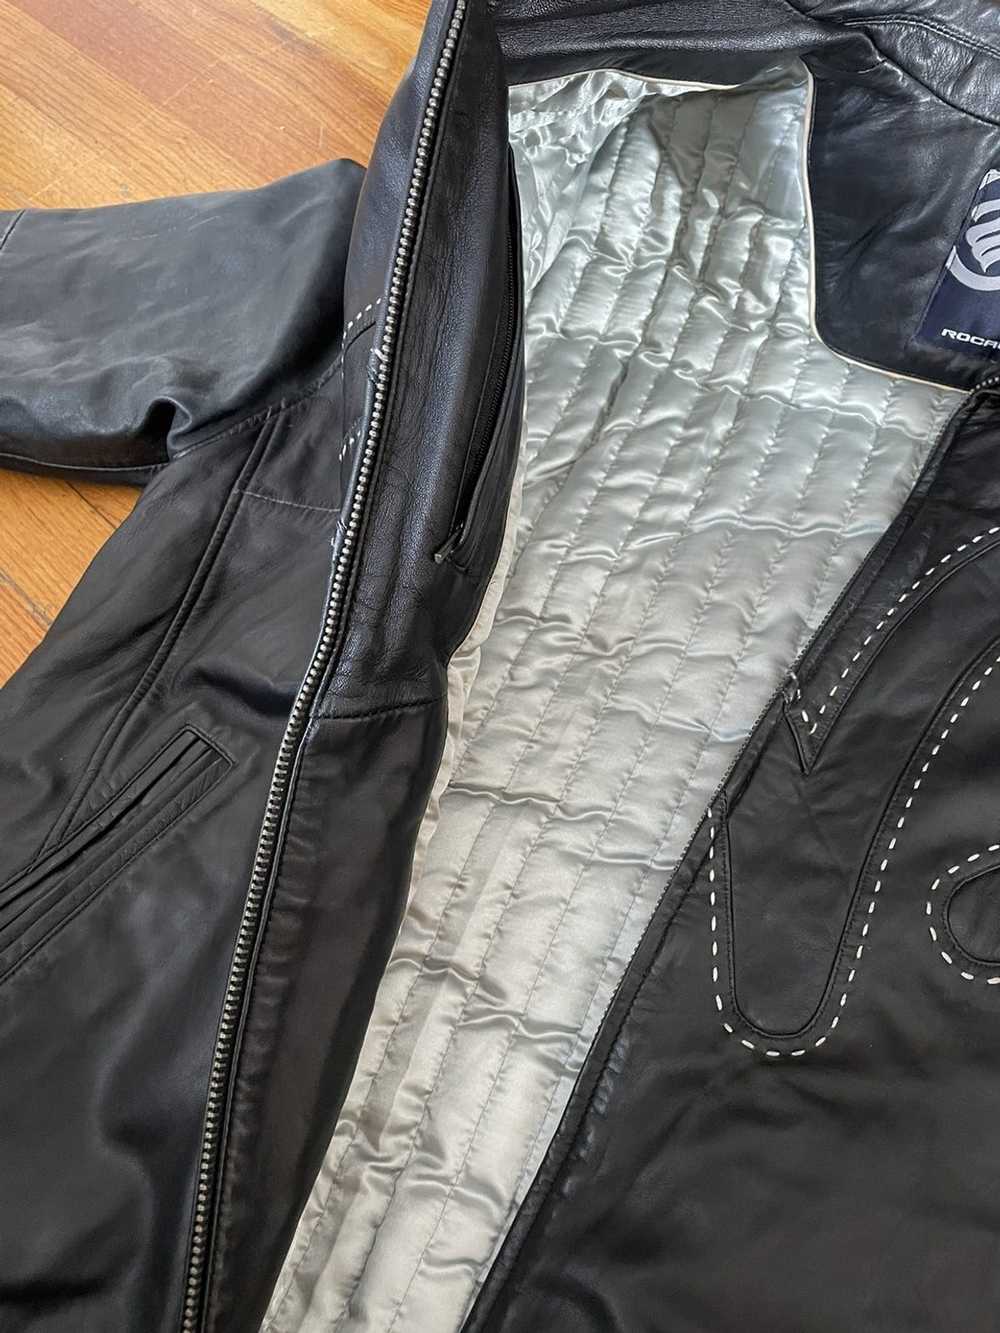 Rocawear Rocawear Leather Jacket - image 6